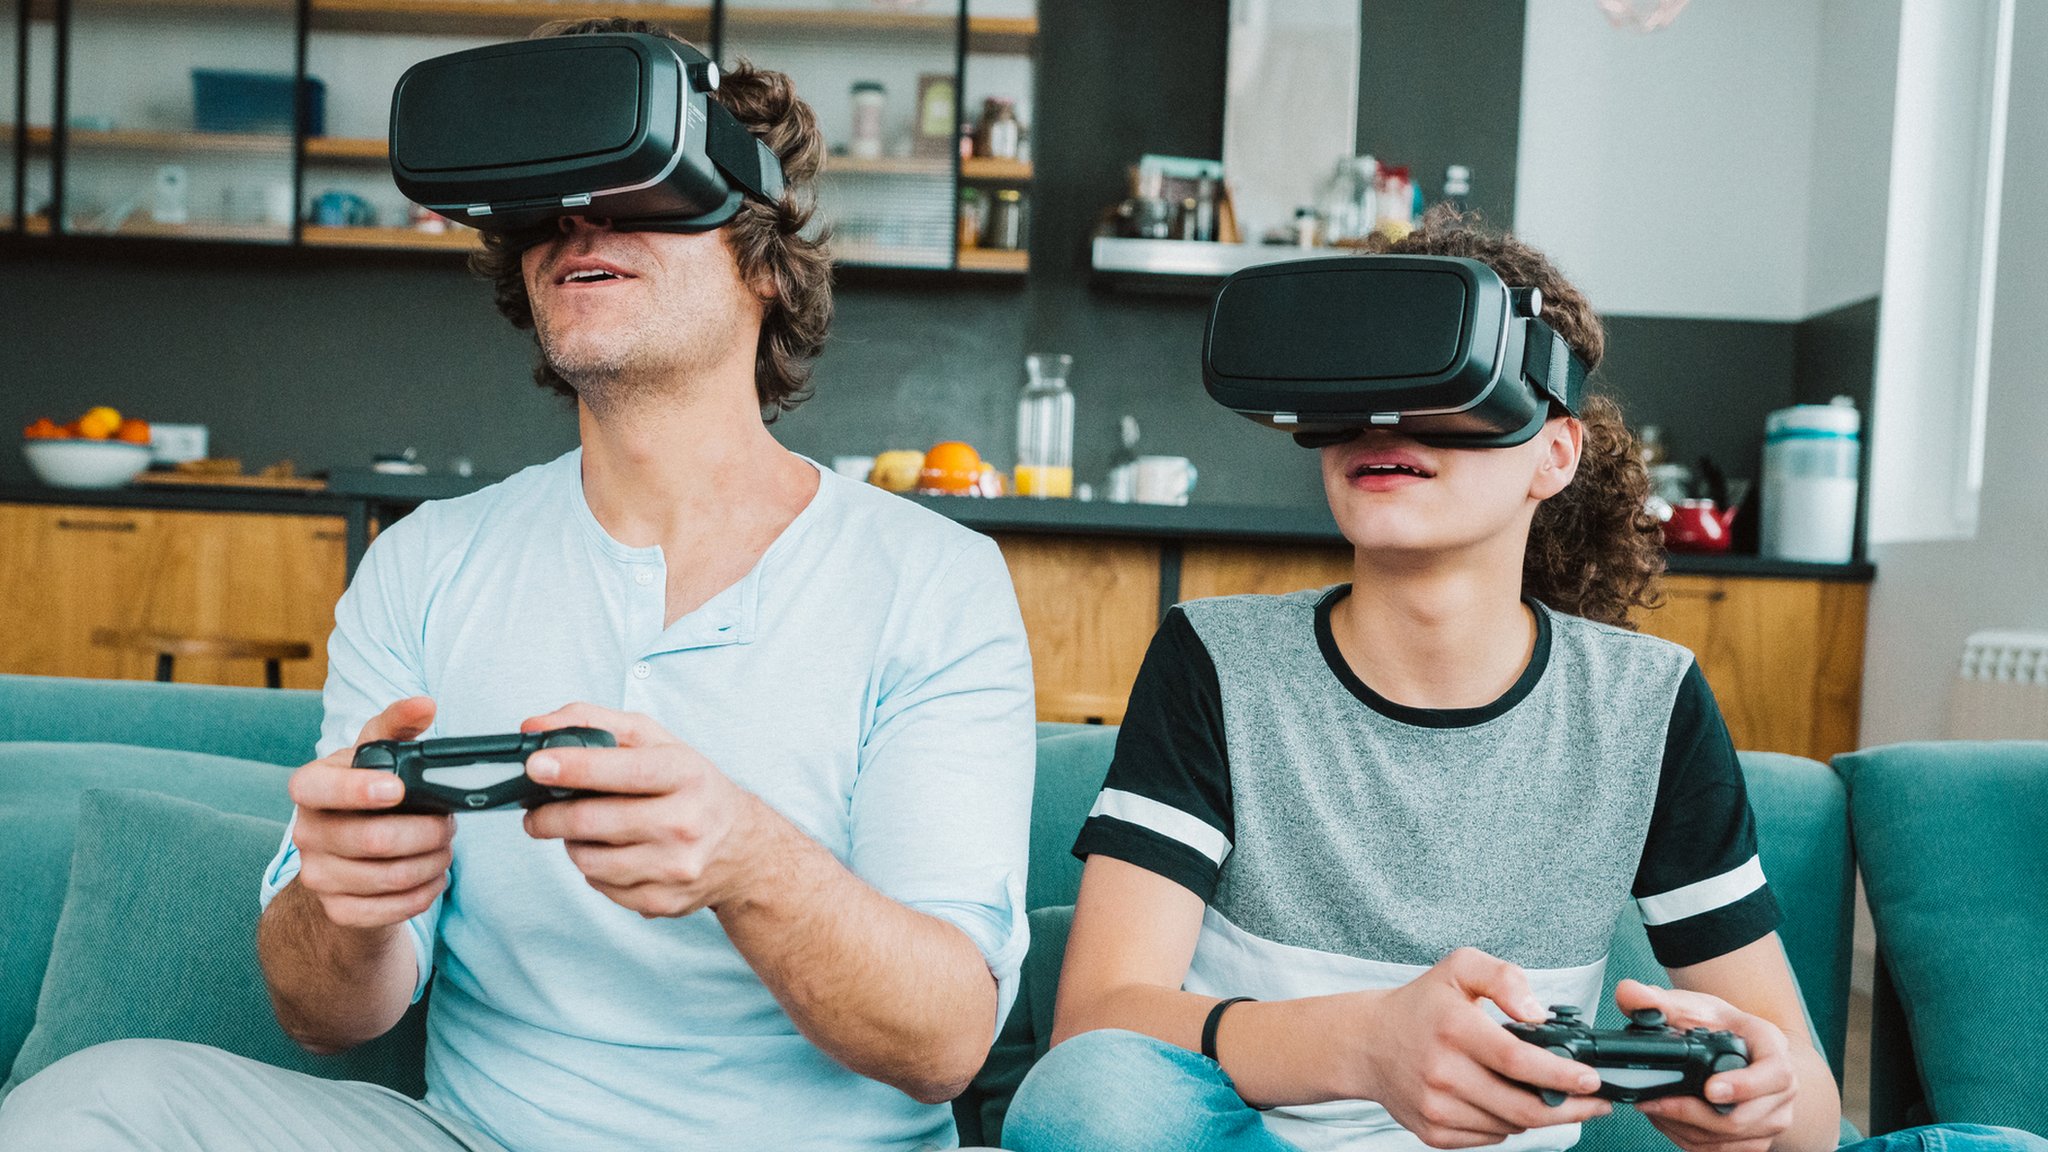 virtual reality helmet games